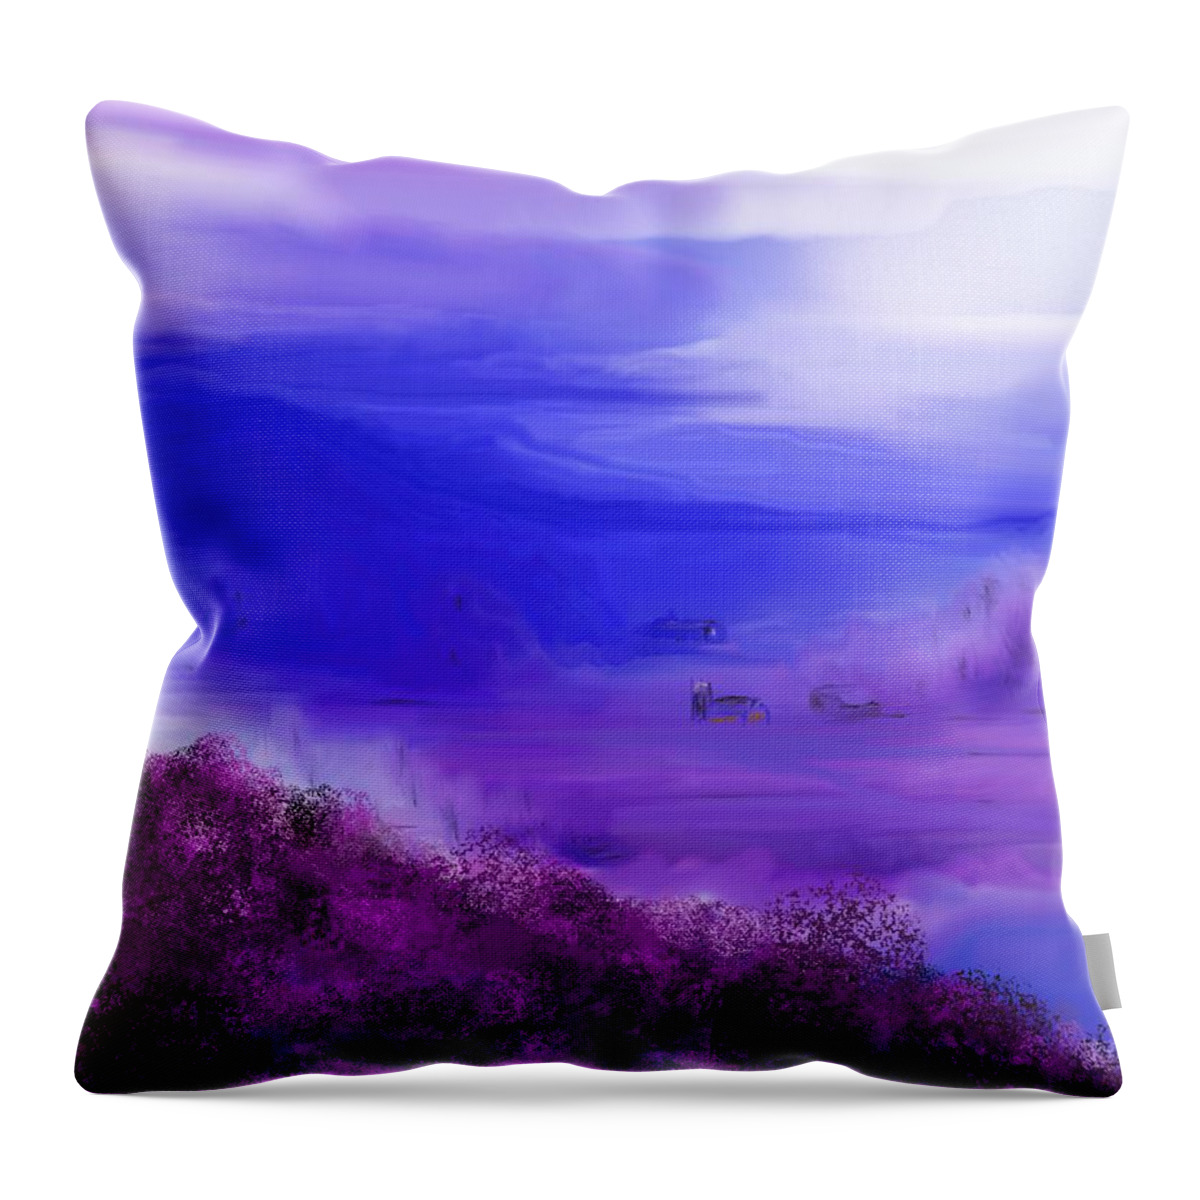 Fine Art Throw Pillow featuring the digital art Landscape 081610 by David Lane